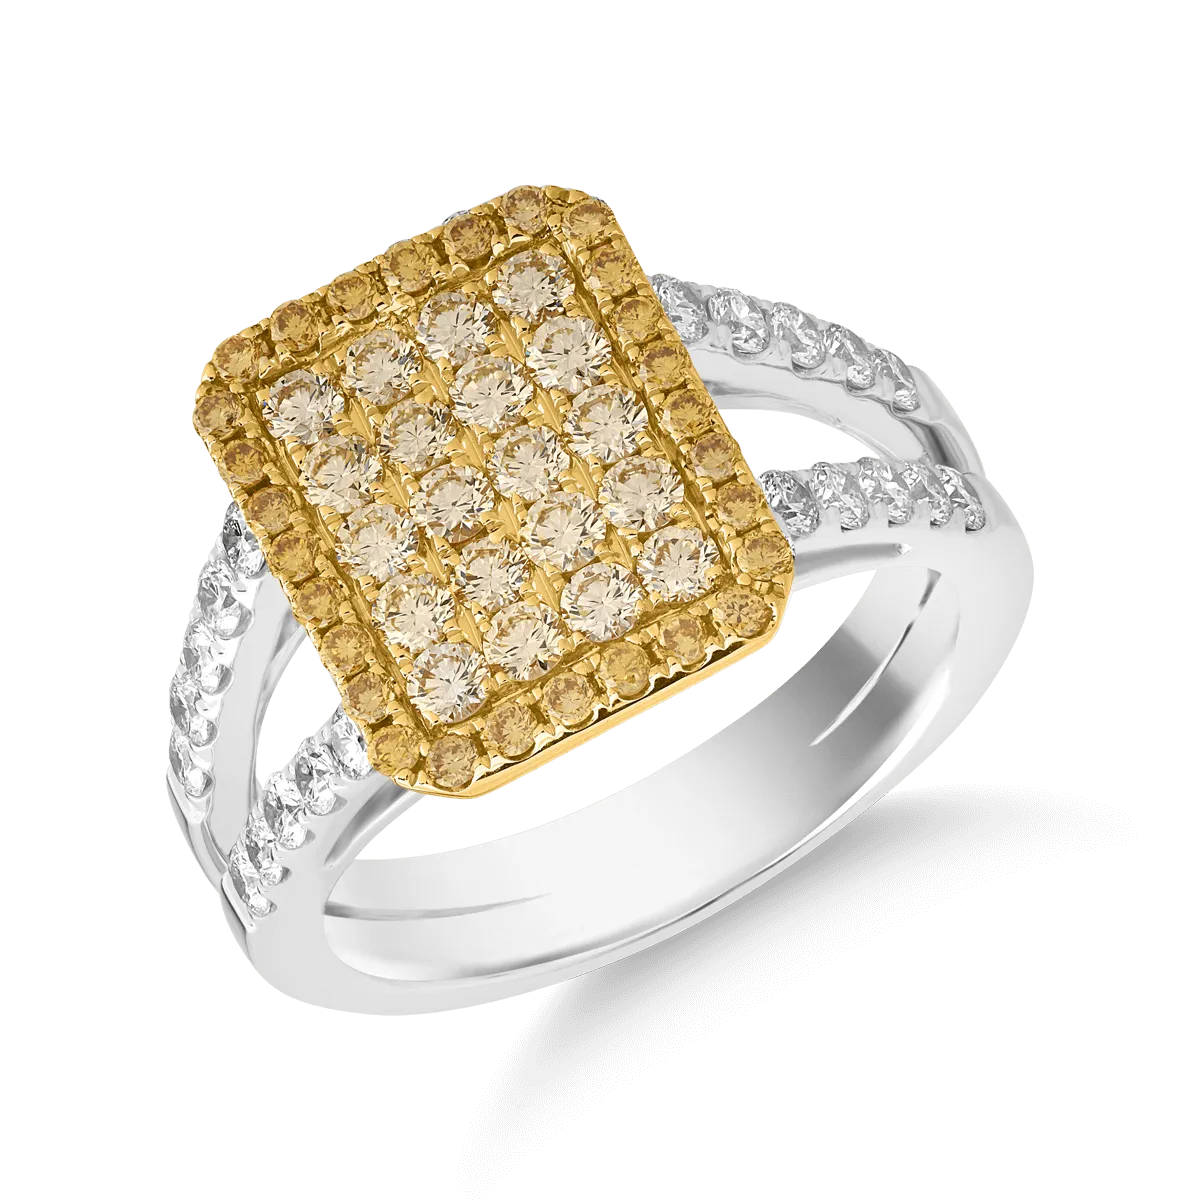 18K white/yellow gold ring with yellow diamonds of 0.85ct